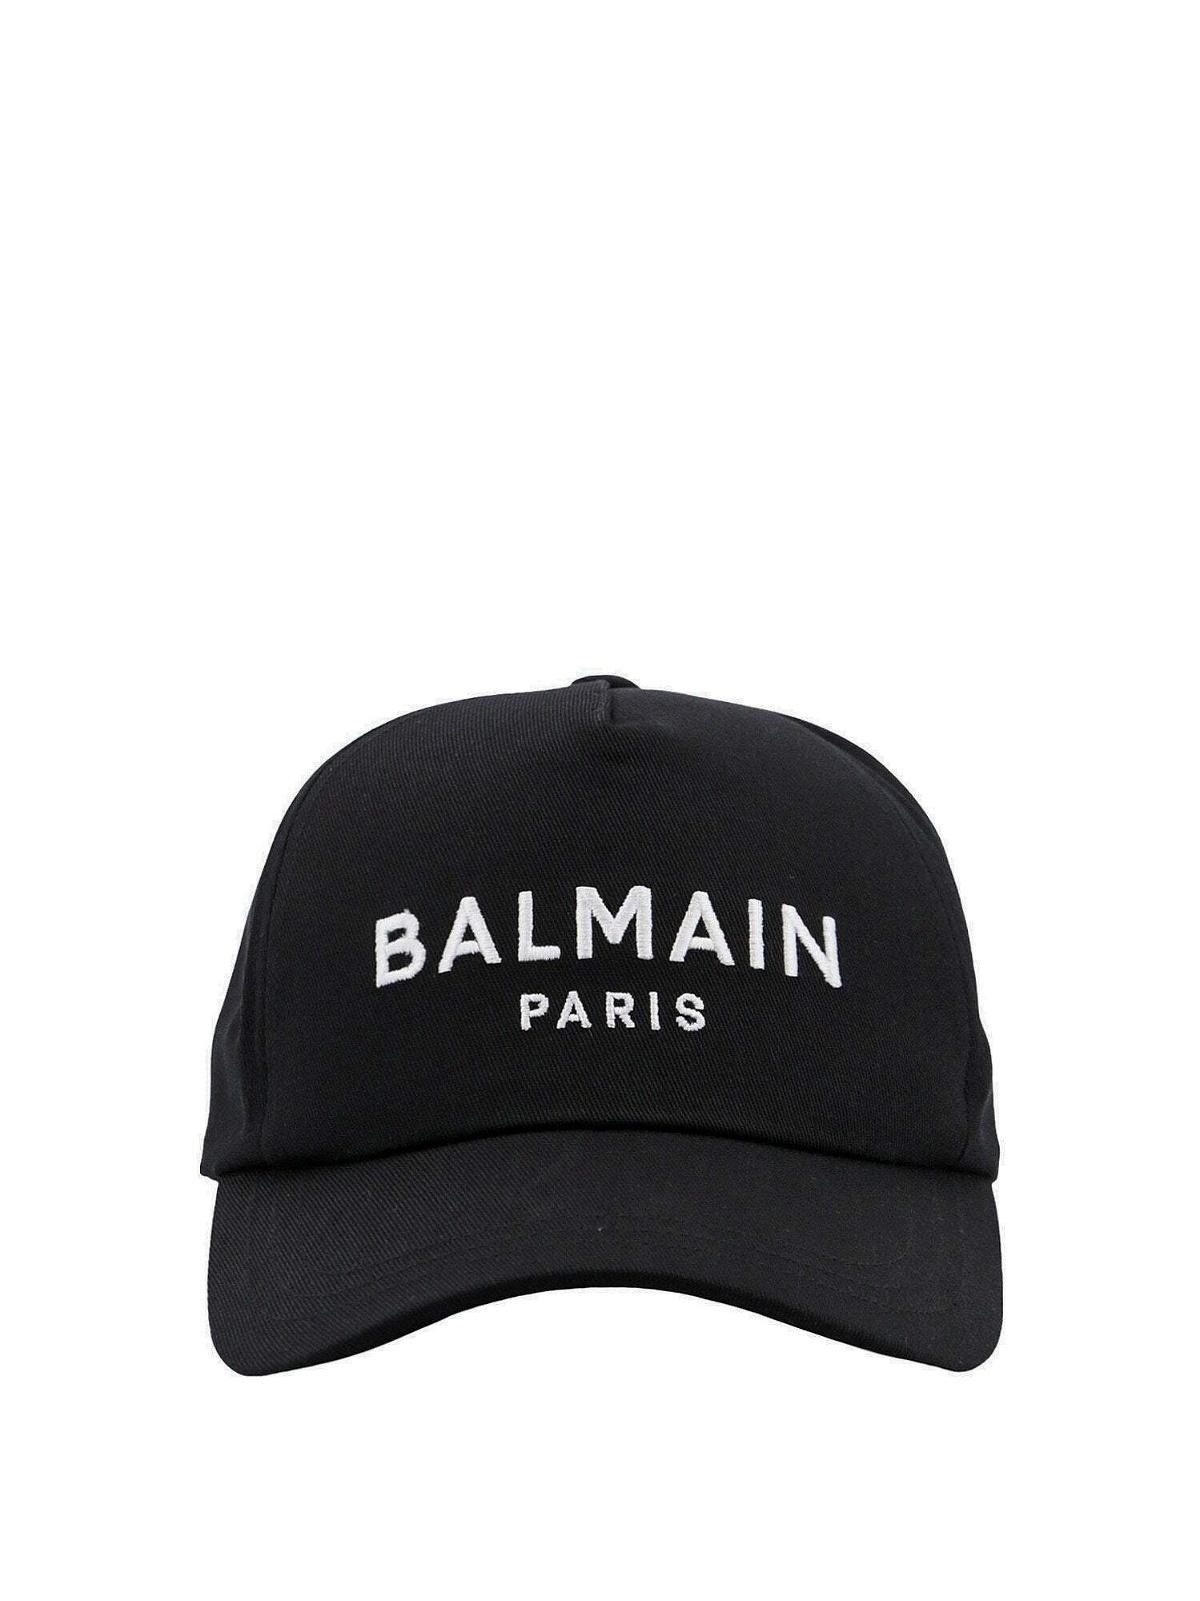 Balmain Hat Black Mens Balmain